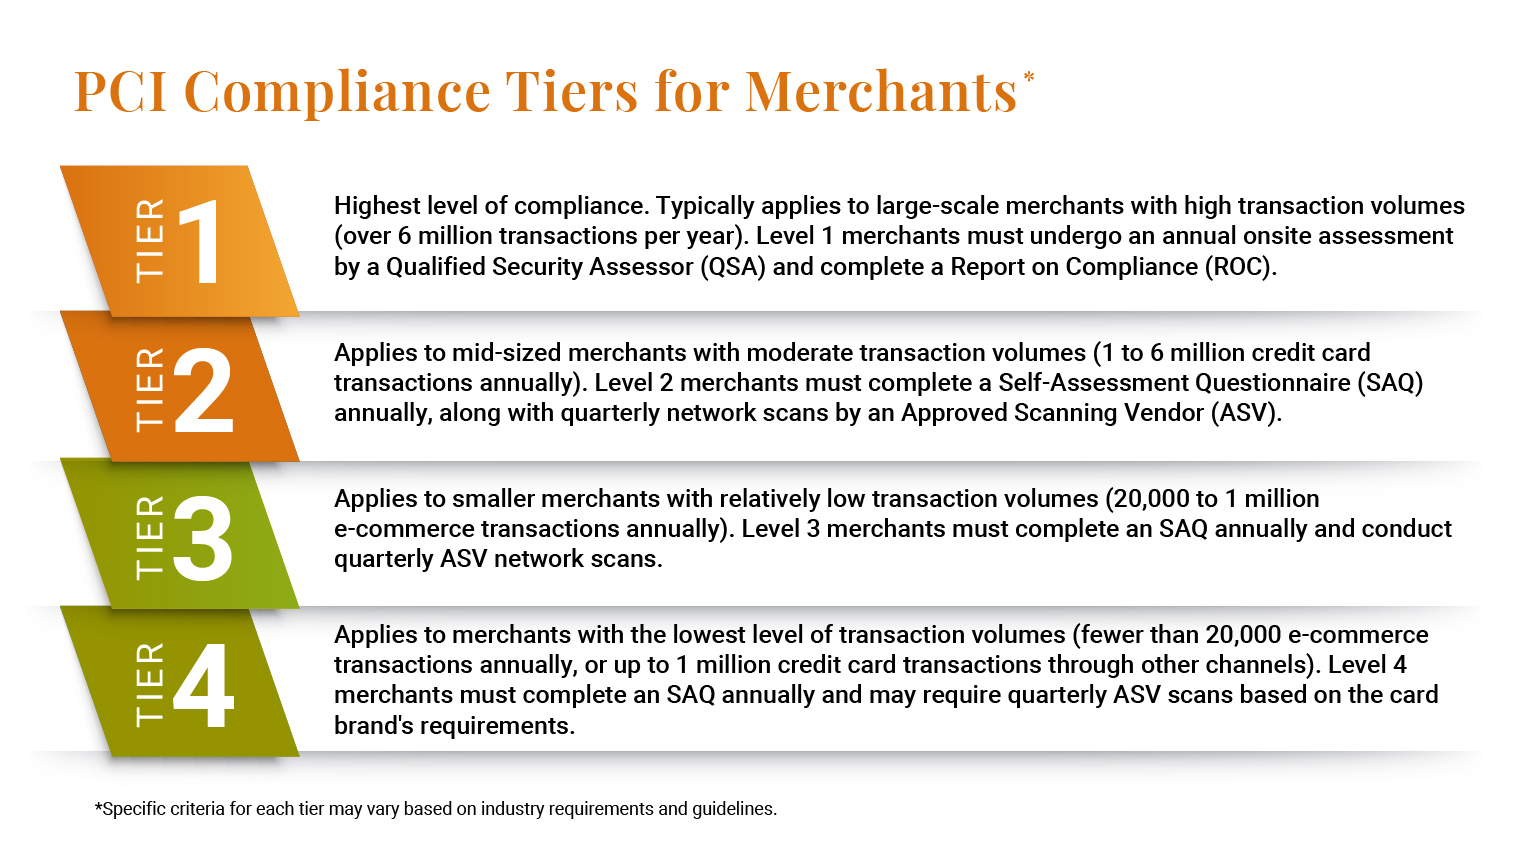 PCI Compliance Tiers for Merchants